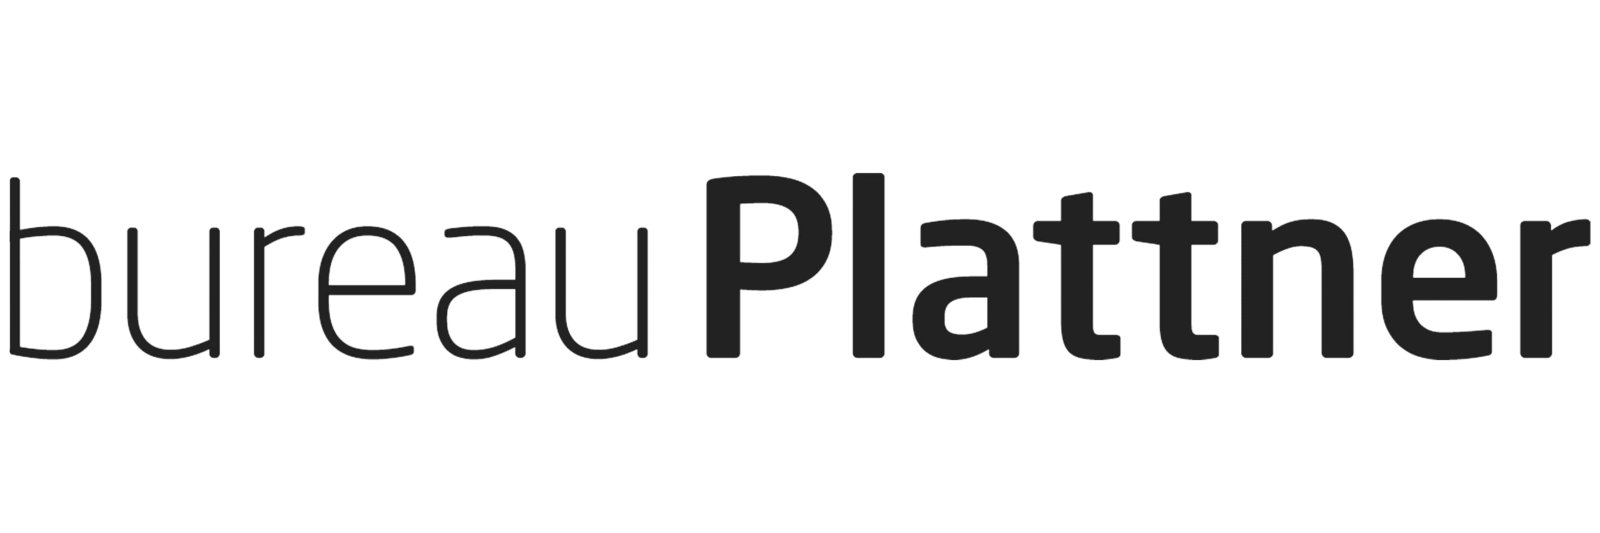 Logo bureau Plattner